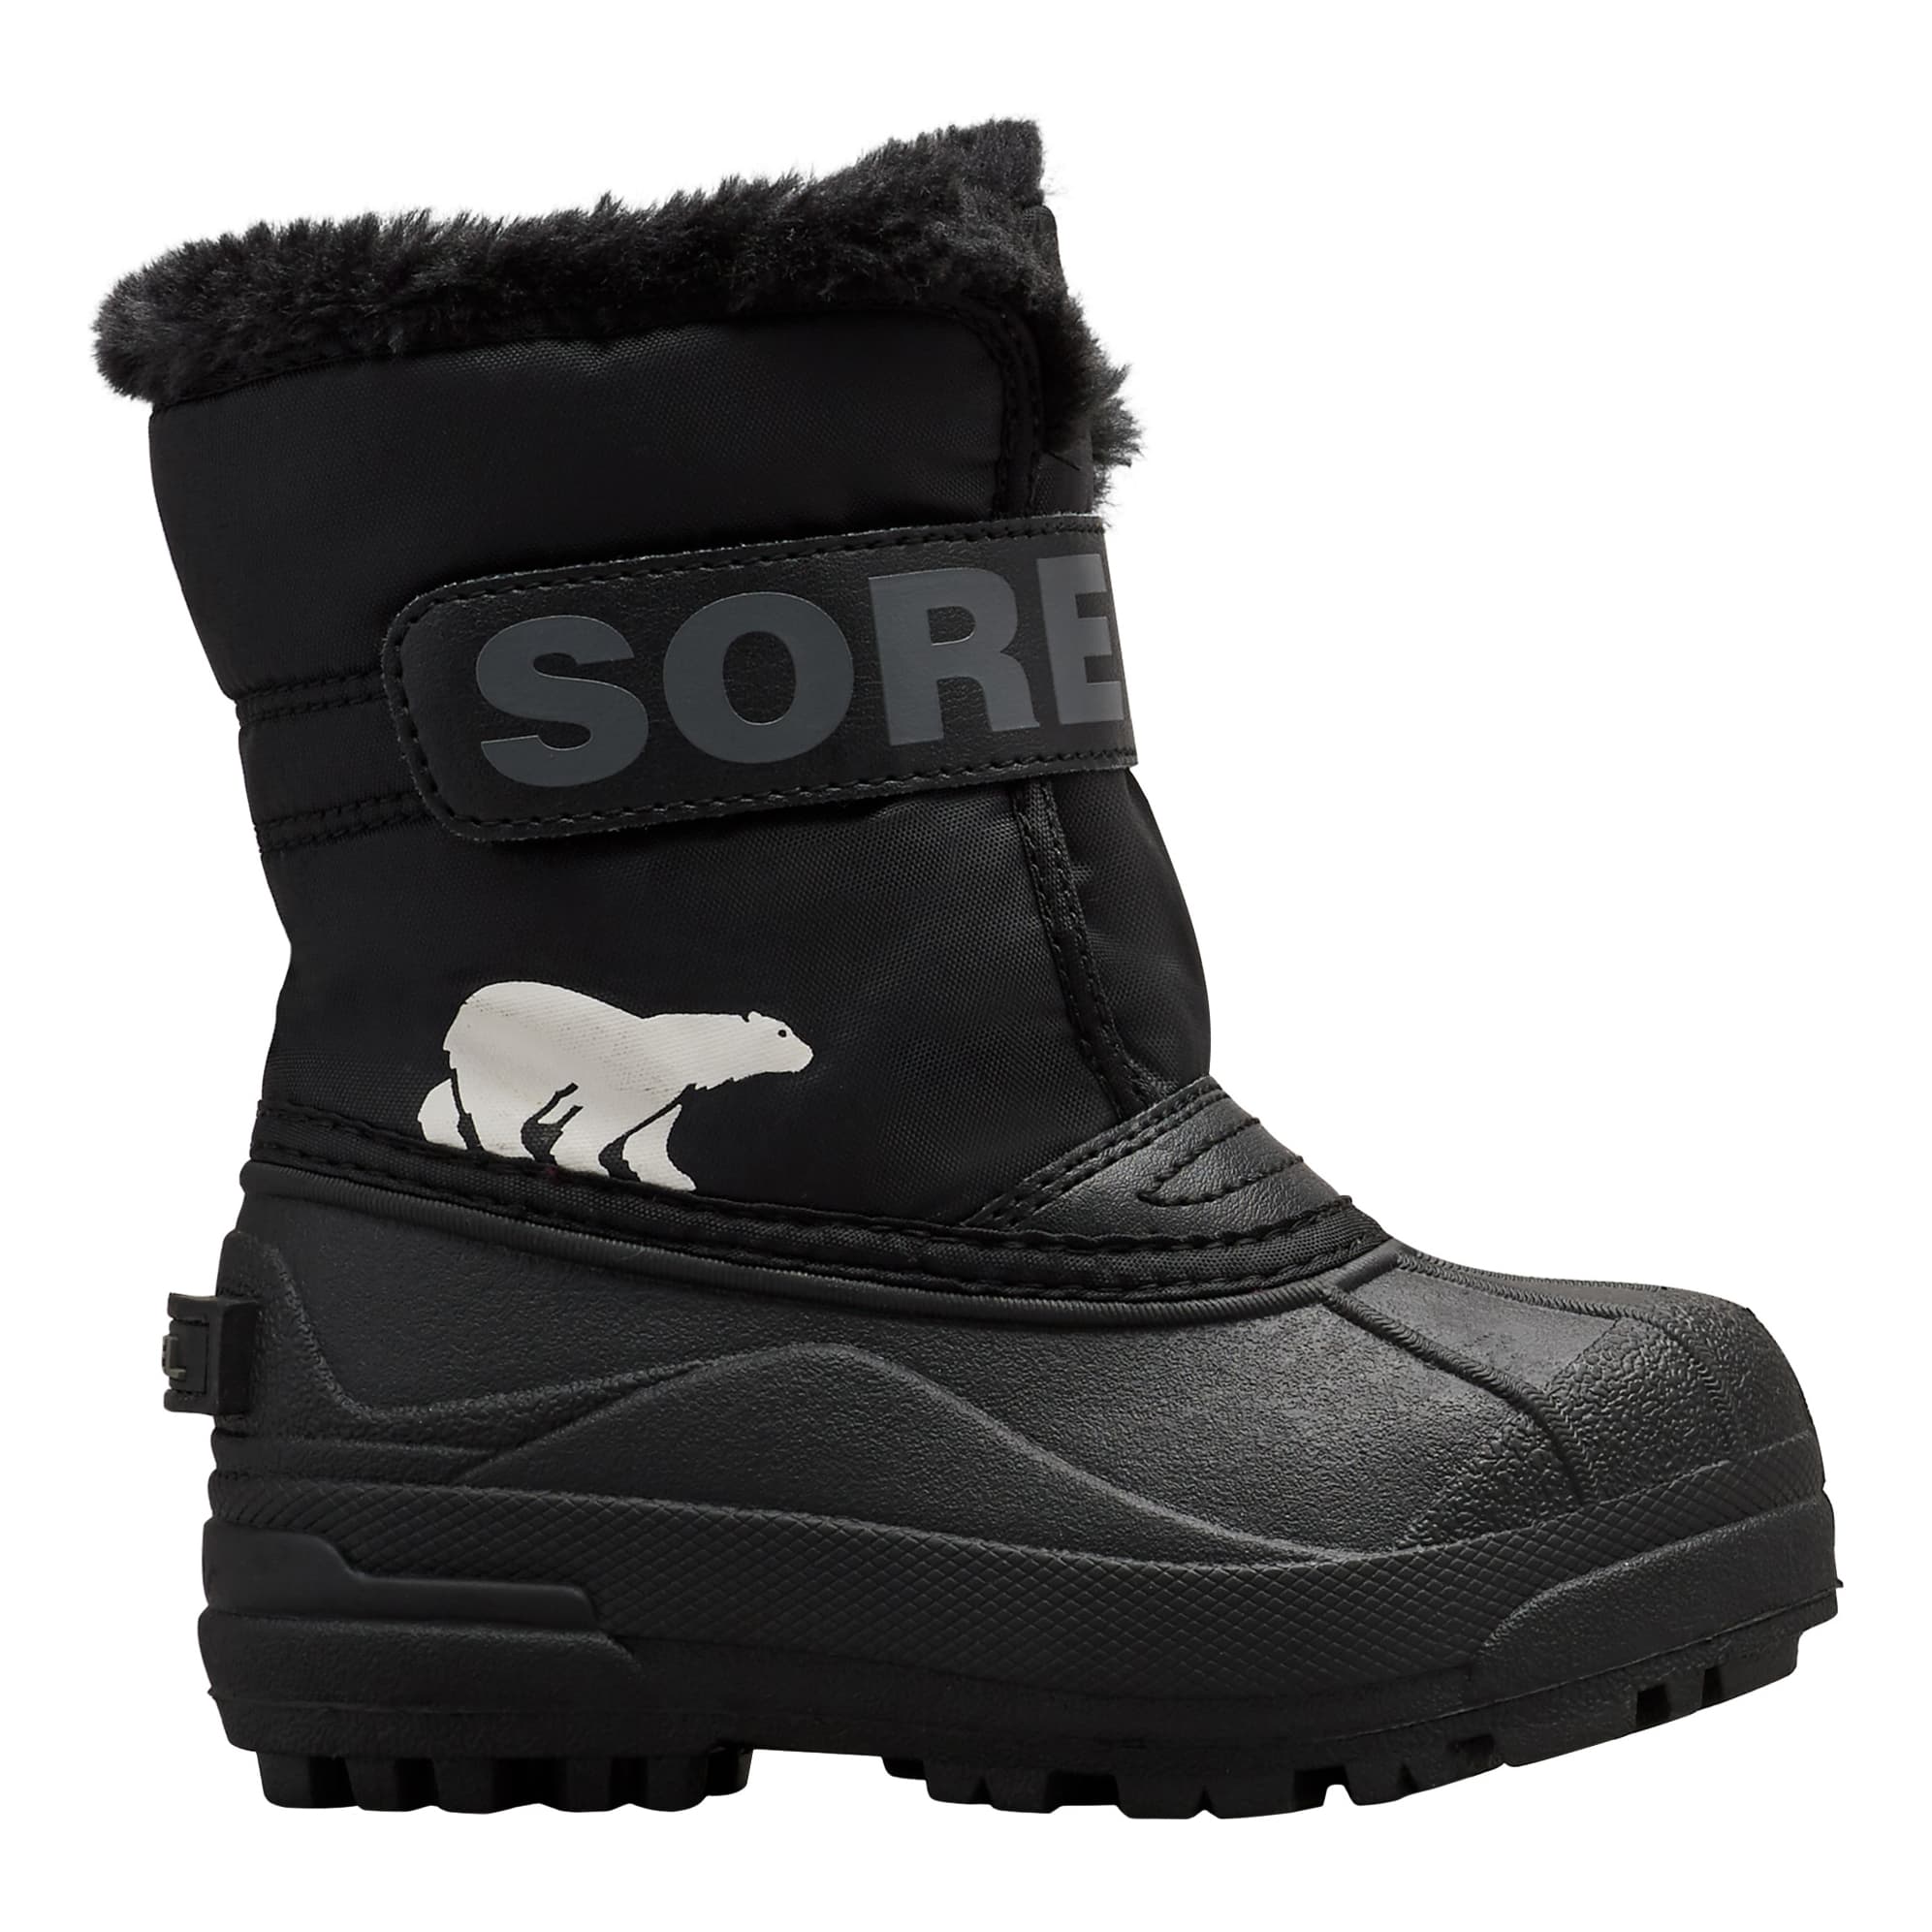 Sorel® Toddler's Snow Commander Boots - Black/Charcoal